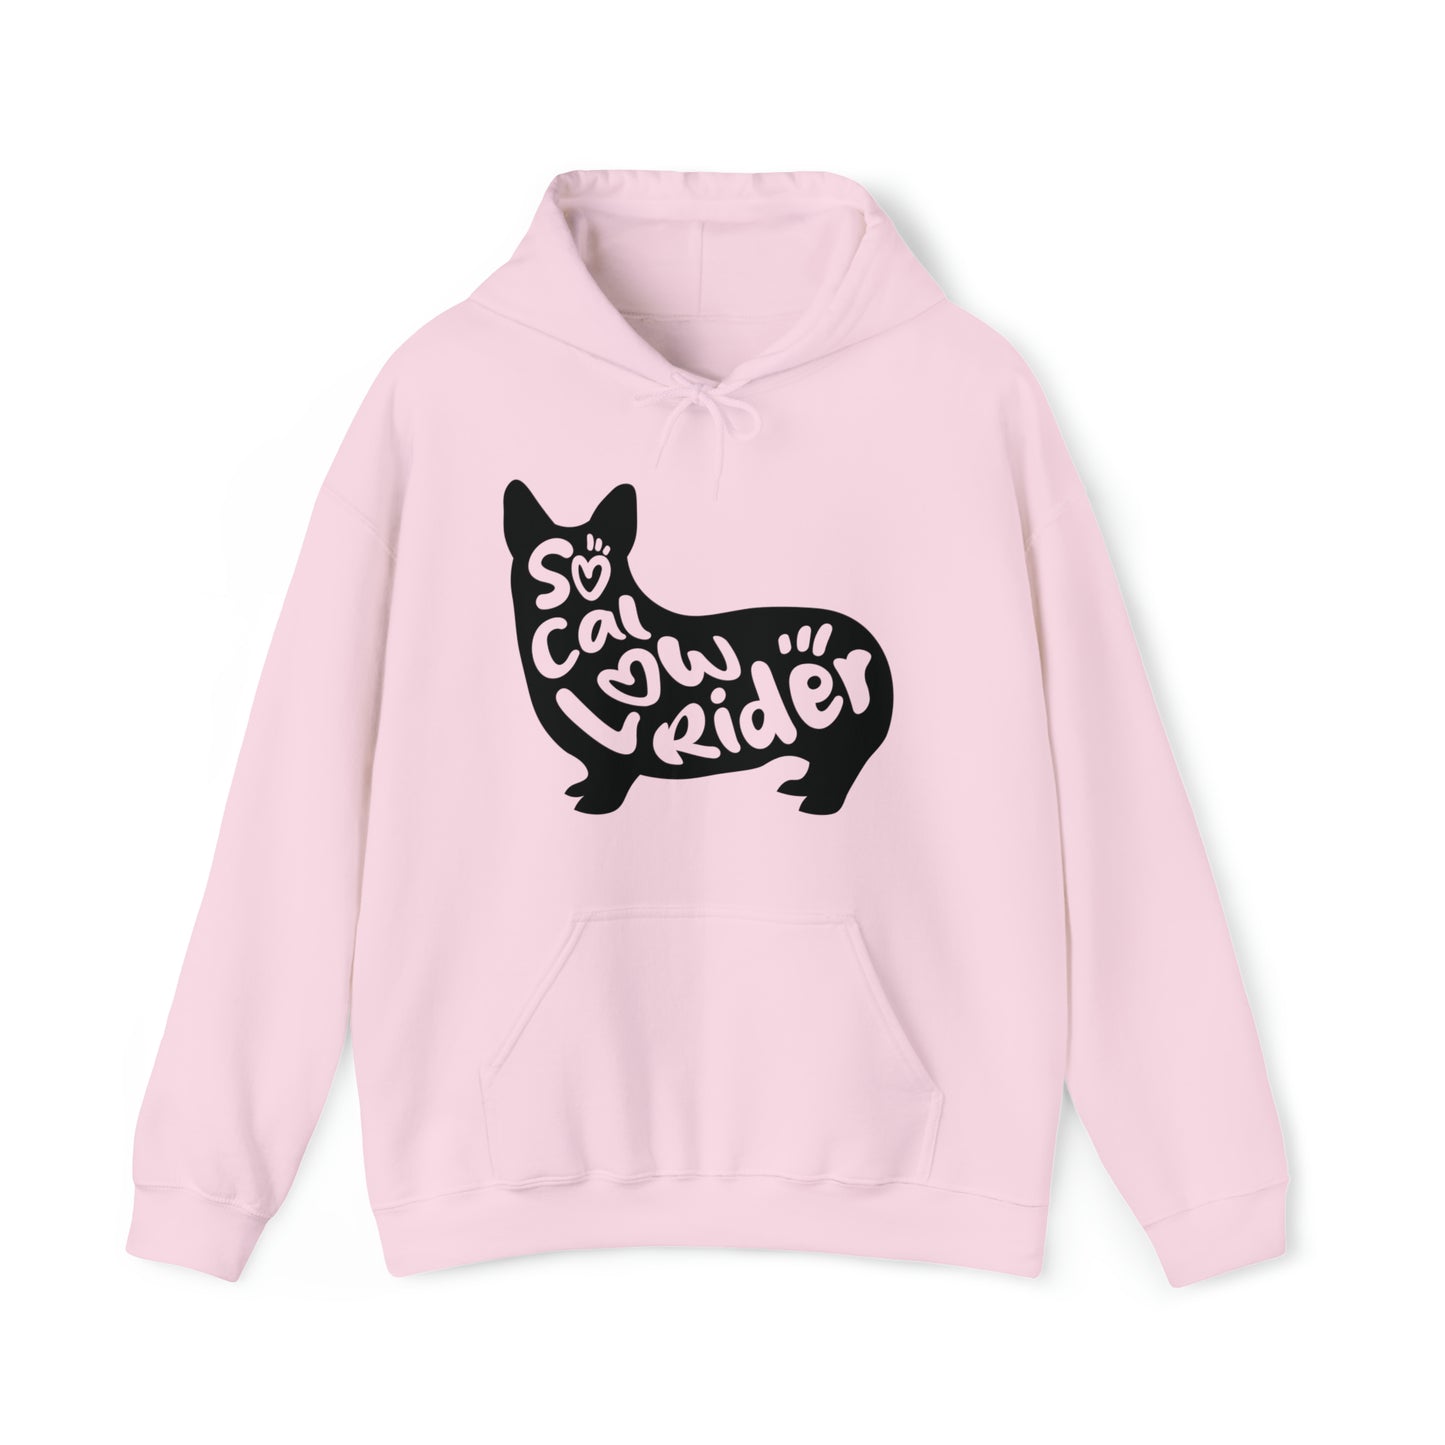 Pink SoCal LowRider Southern California corgi dog hoodie sweatshirt